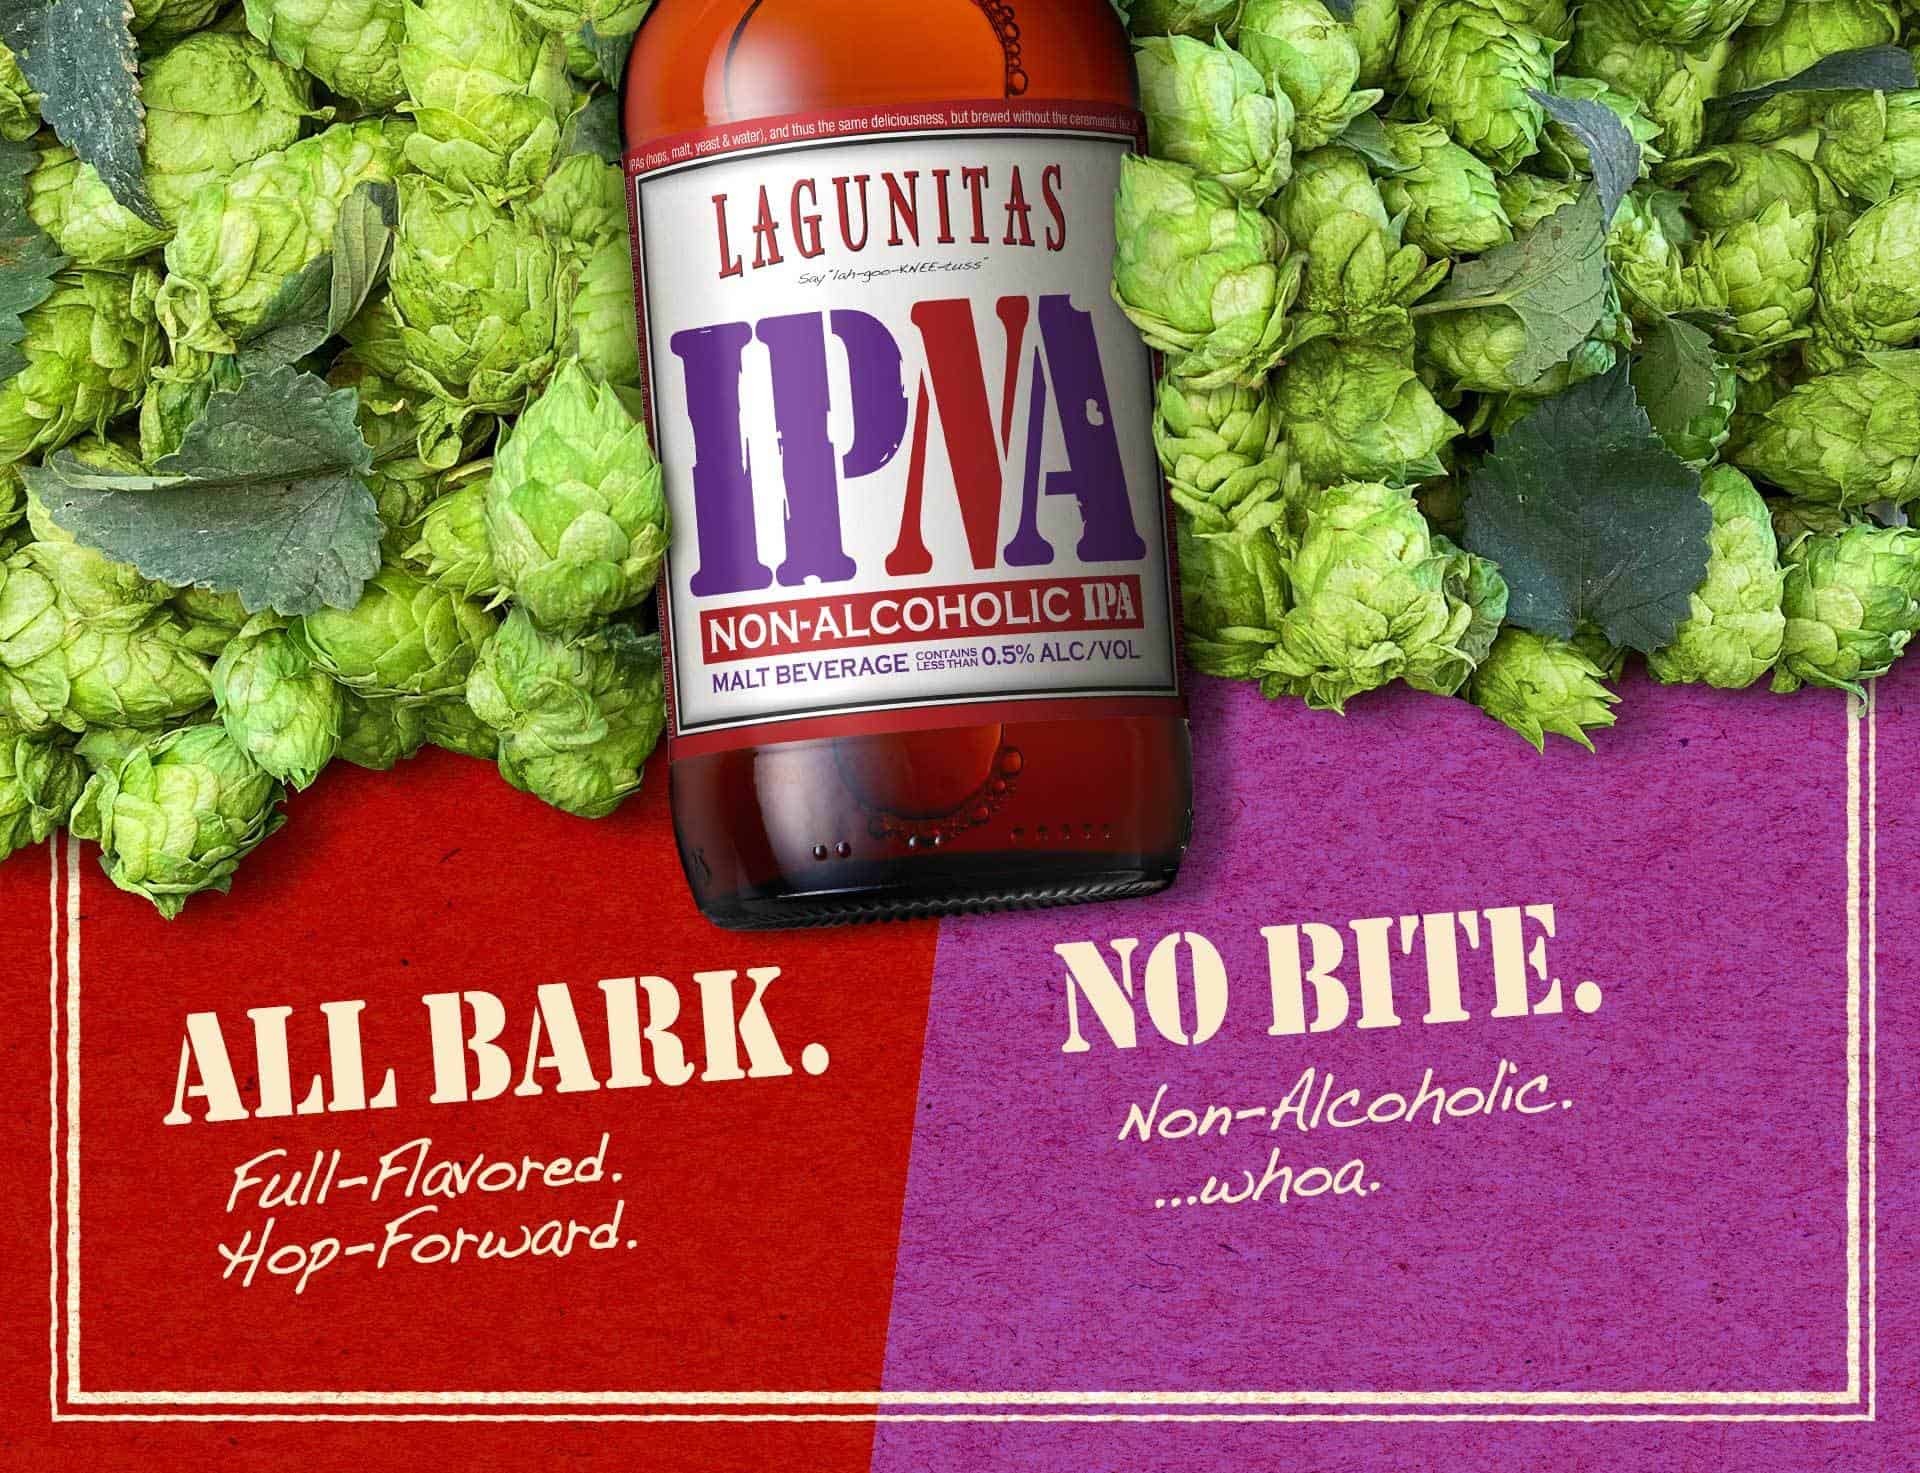 Lagunitas IPNA non-alcoholic IPA